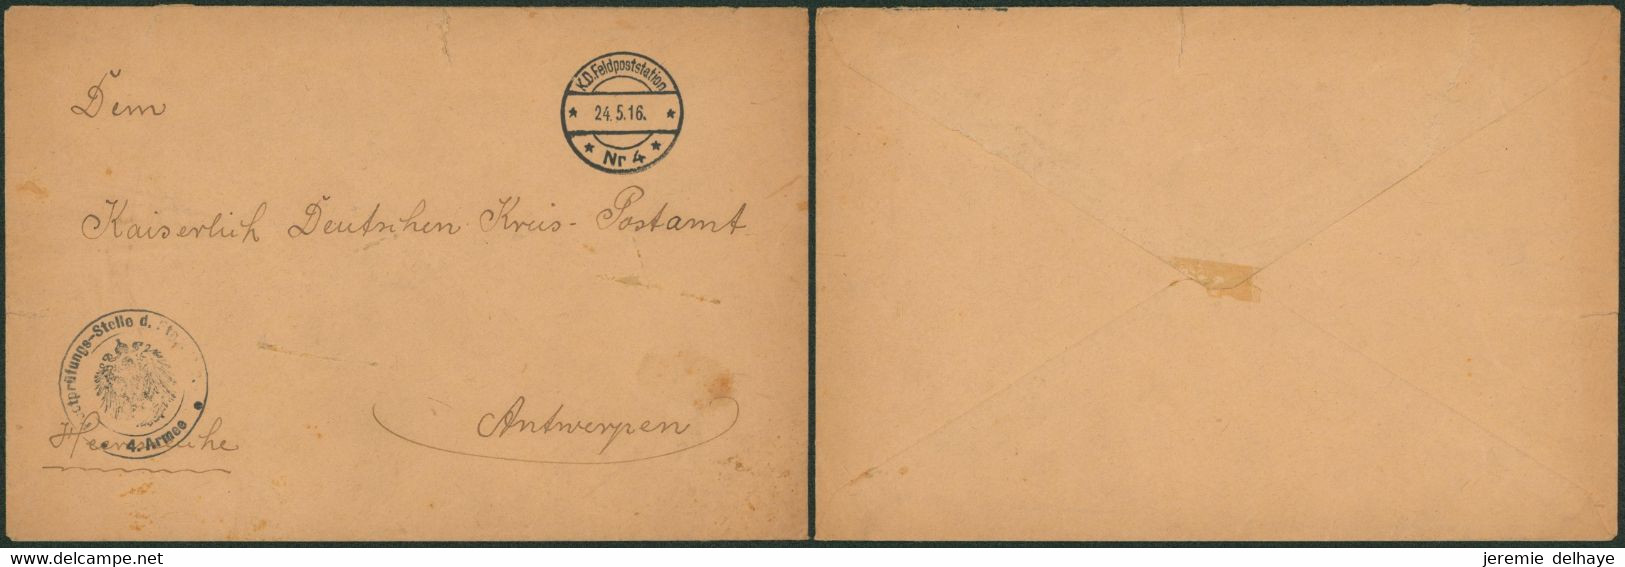 Guerre 14-18 - Feldpostbrief + Cachet Avec Aigle "Postprüfungs-Stelle D. Etappe / 4. Armee" (Nr 4, 1916) > Antwerpen - Deutsche Armee